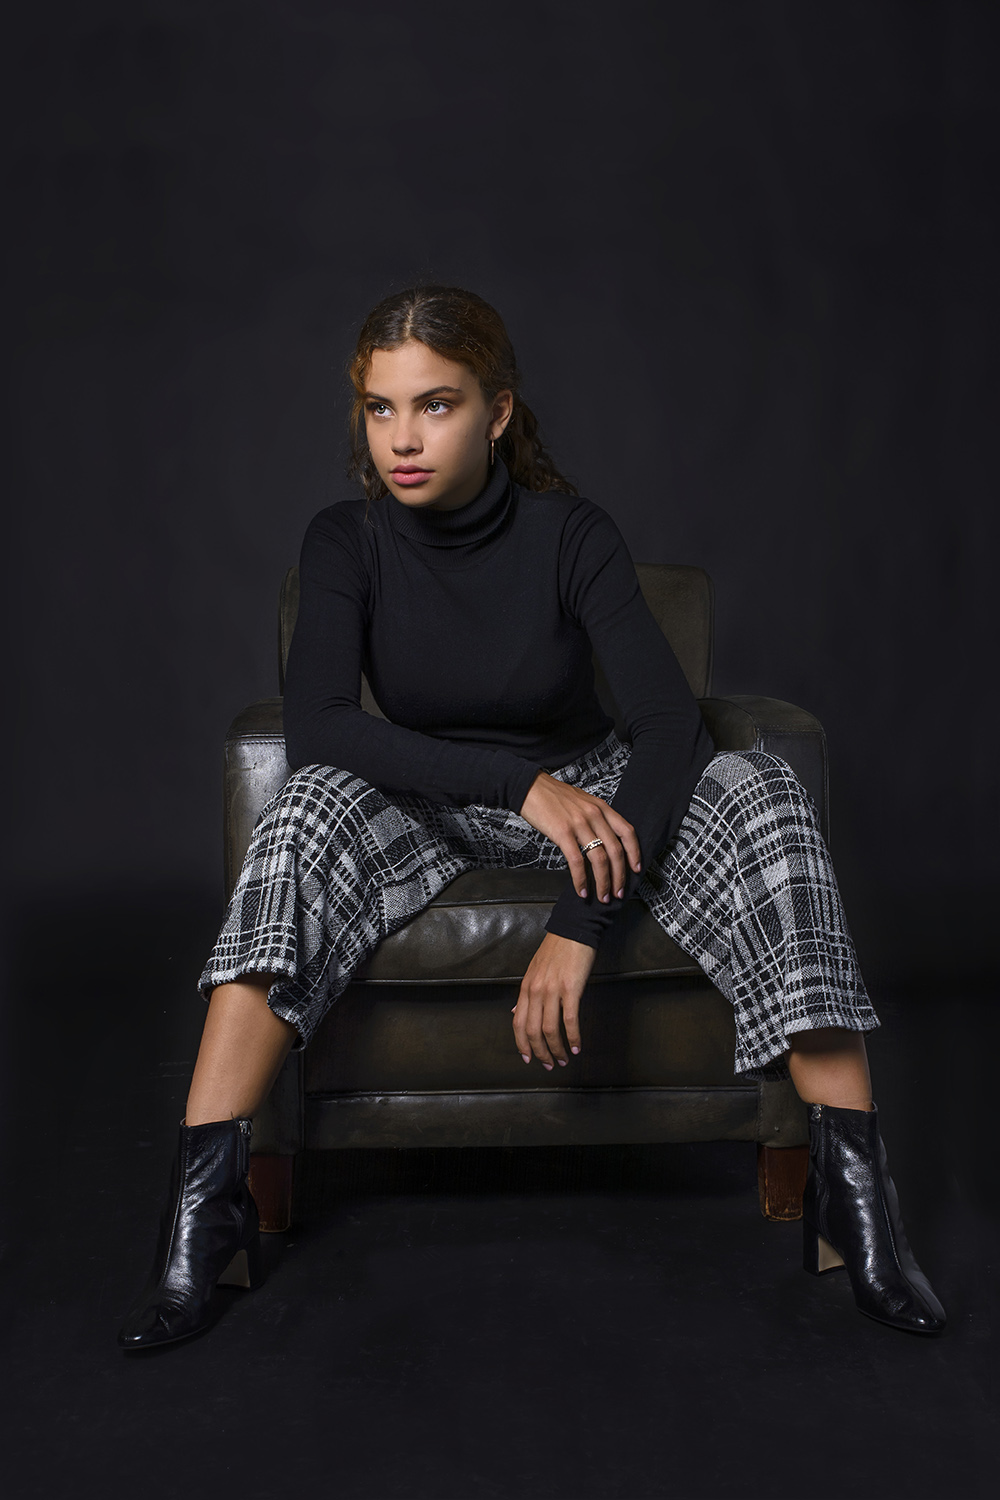 Fenna fashion portret met zara kleding op leer stoel zwarte achtergrond in studio.jpg